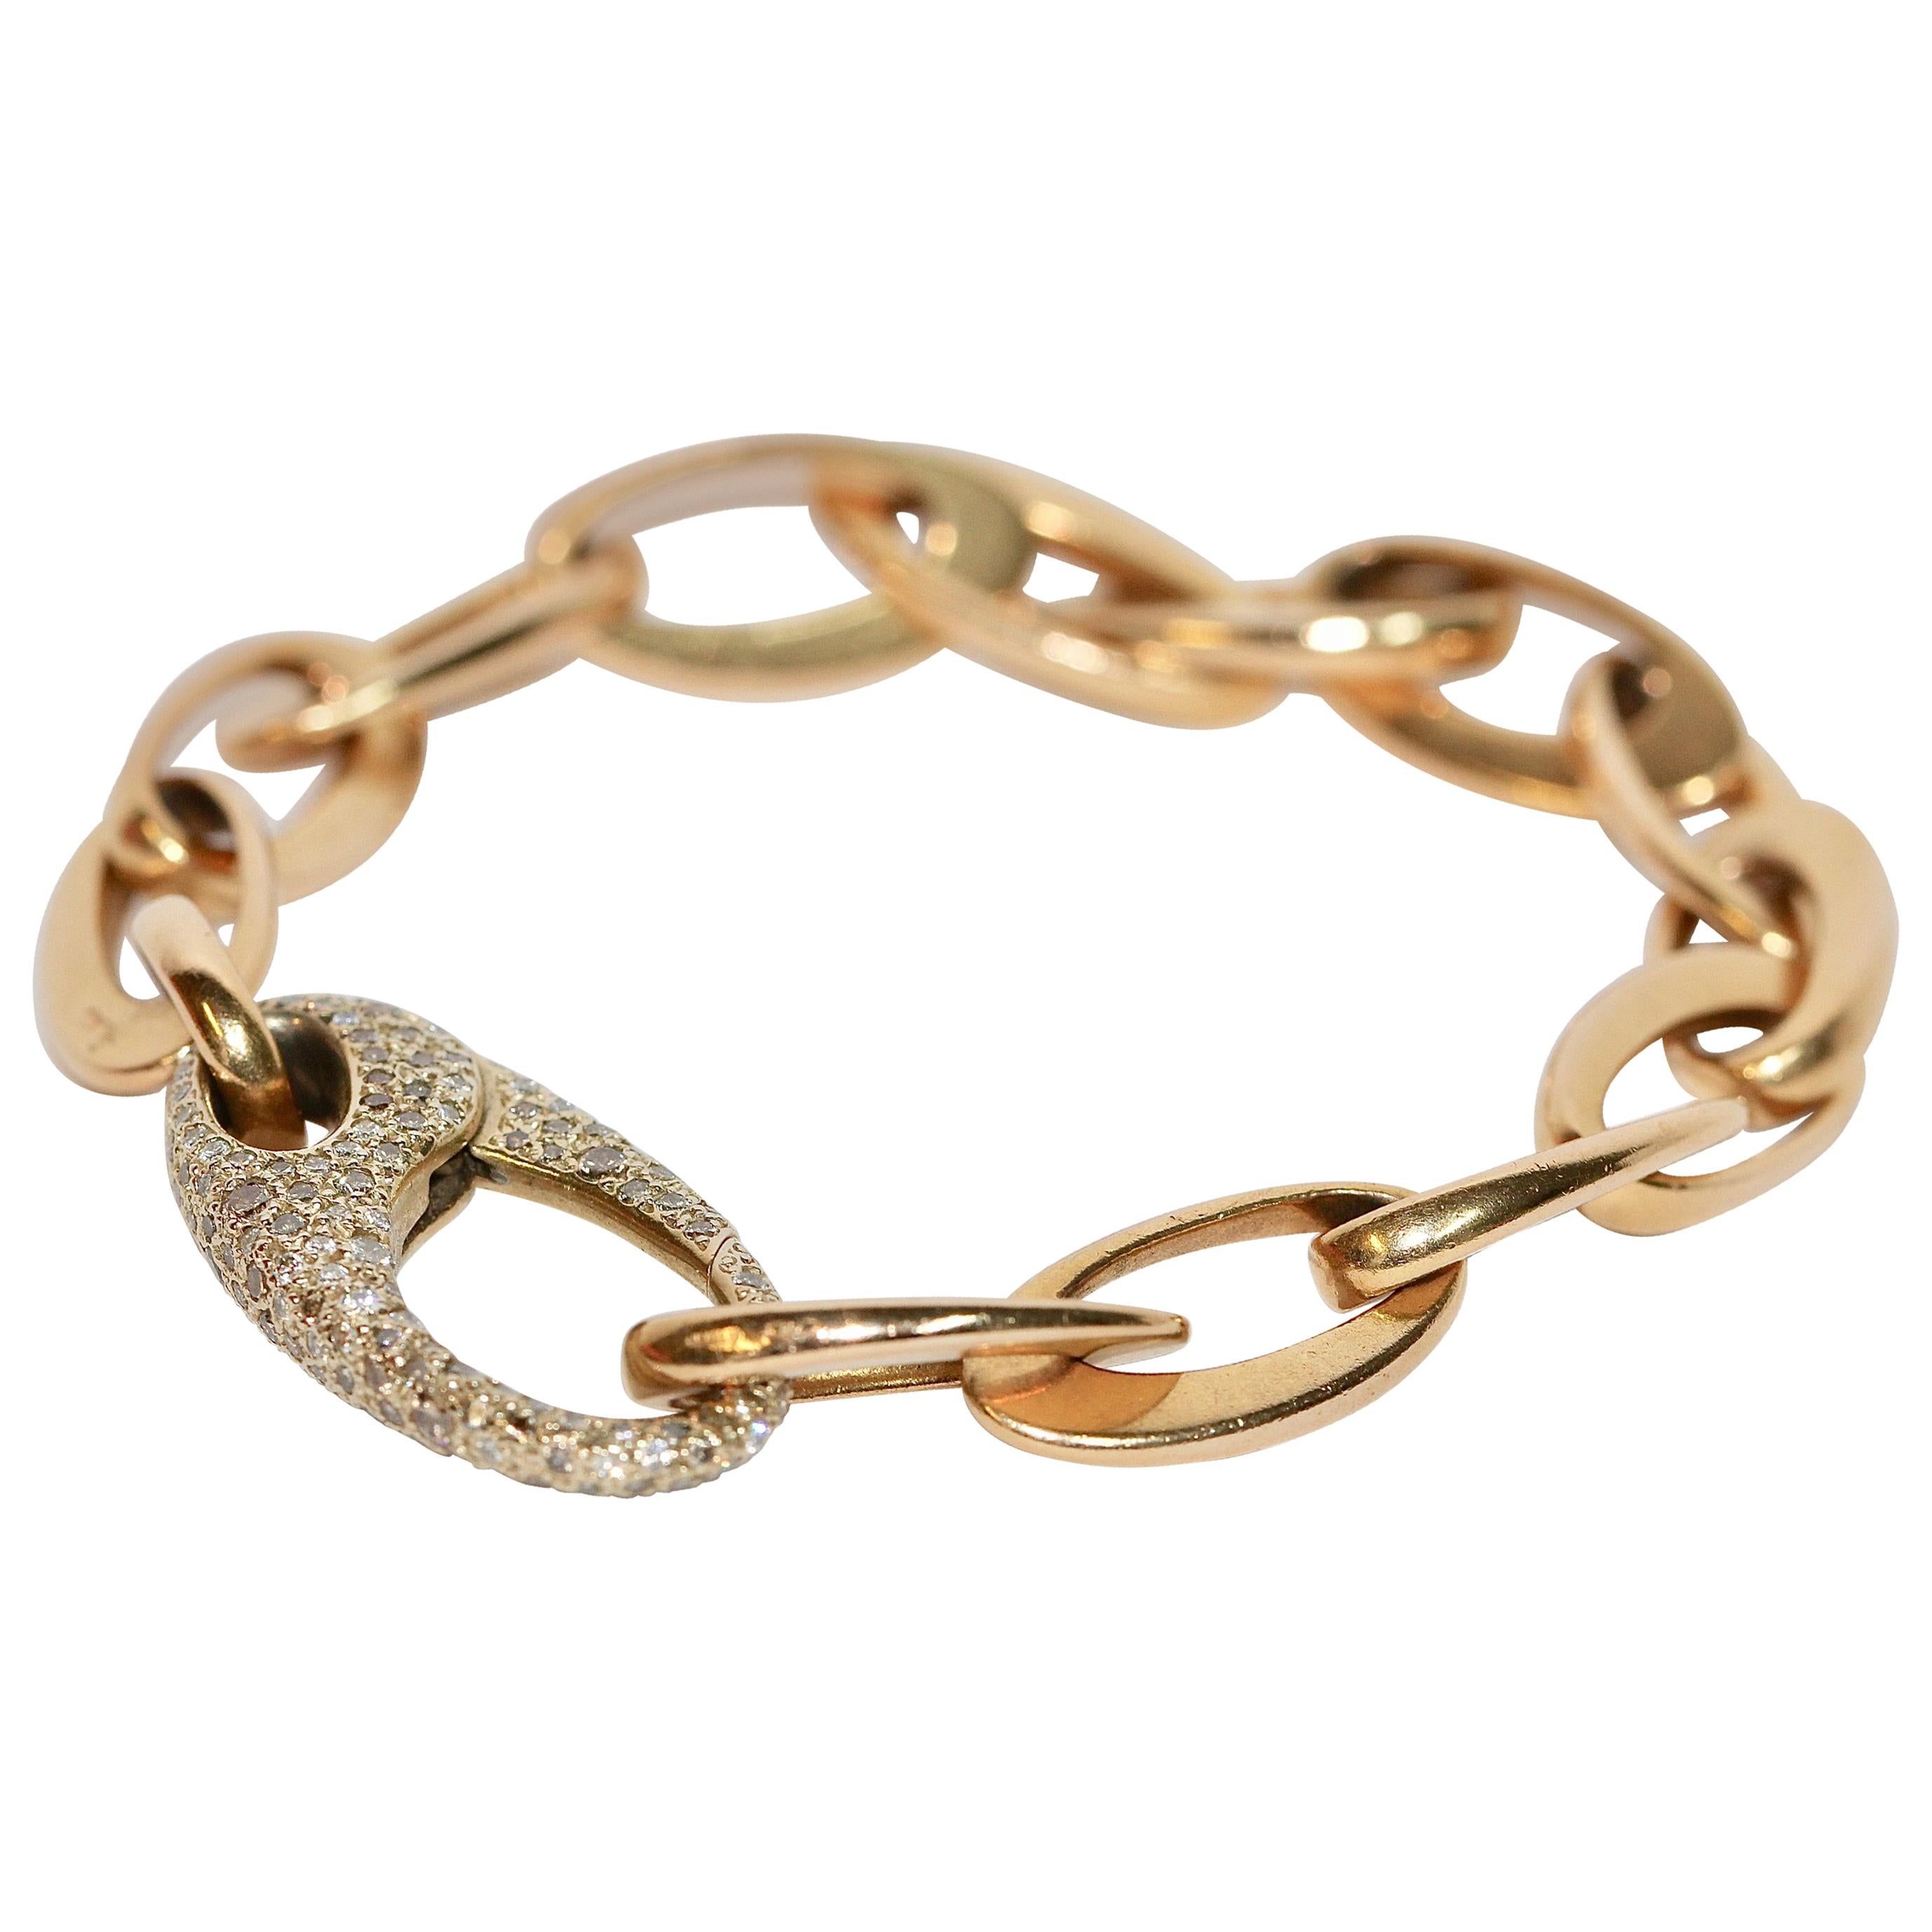 Beautiful Designer Chain Bracelet Made by Pomellato, 18 Karat Gold with Diamonds